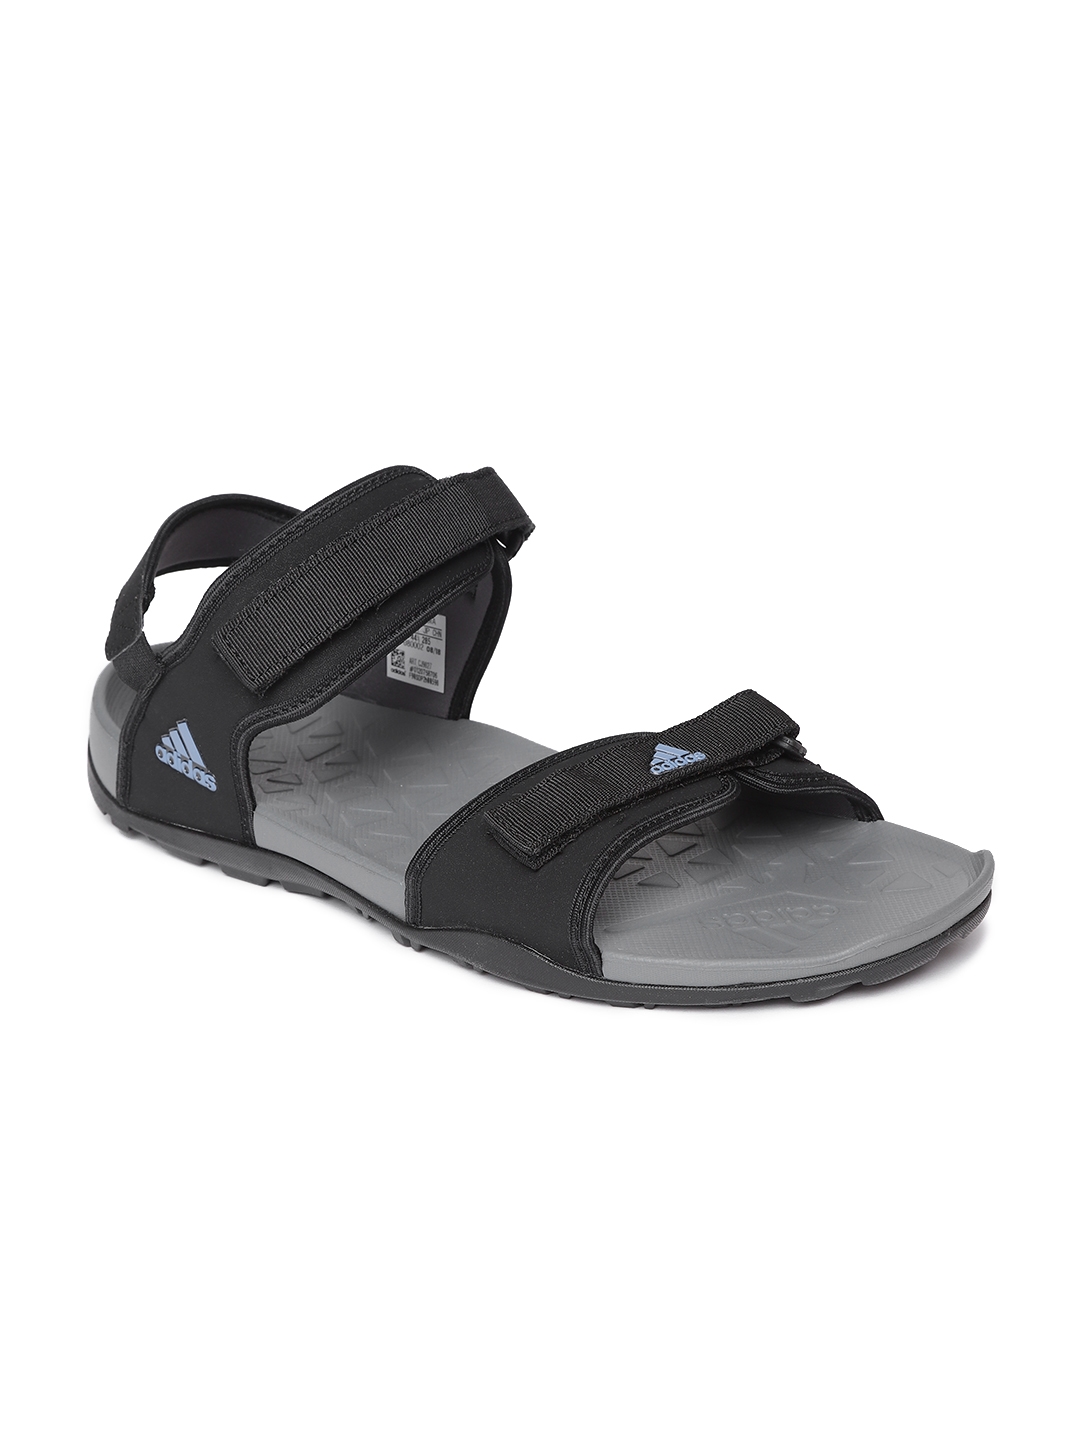 ADIDAS Men Black Outdoor Hoist Sandals 